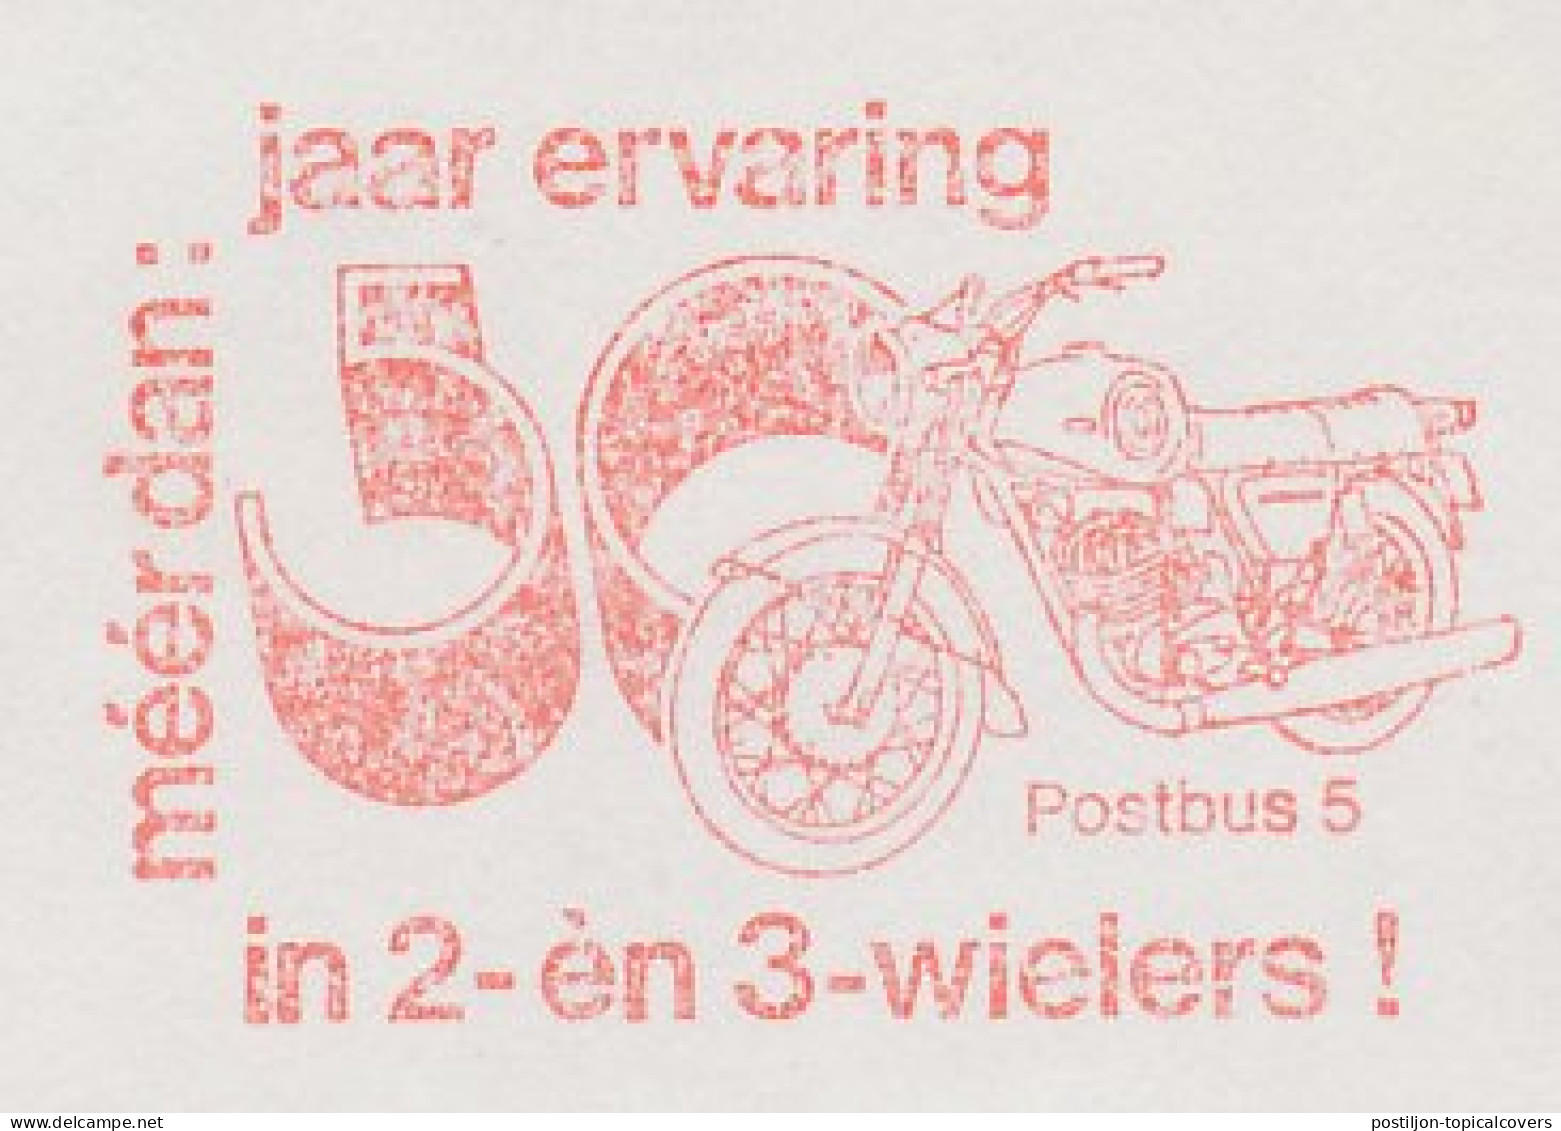 Meter Top Cut Netherlands 1987 Motorcycle - Motos